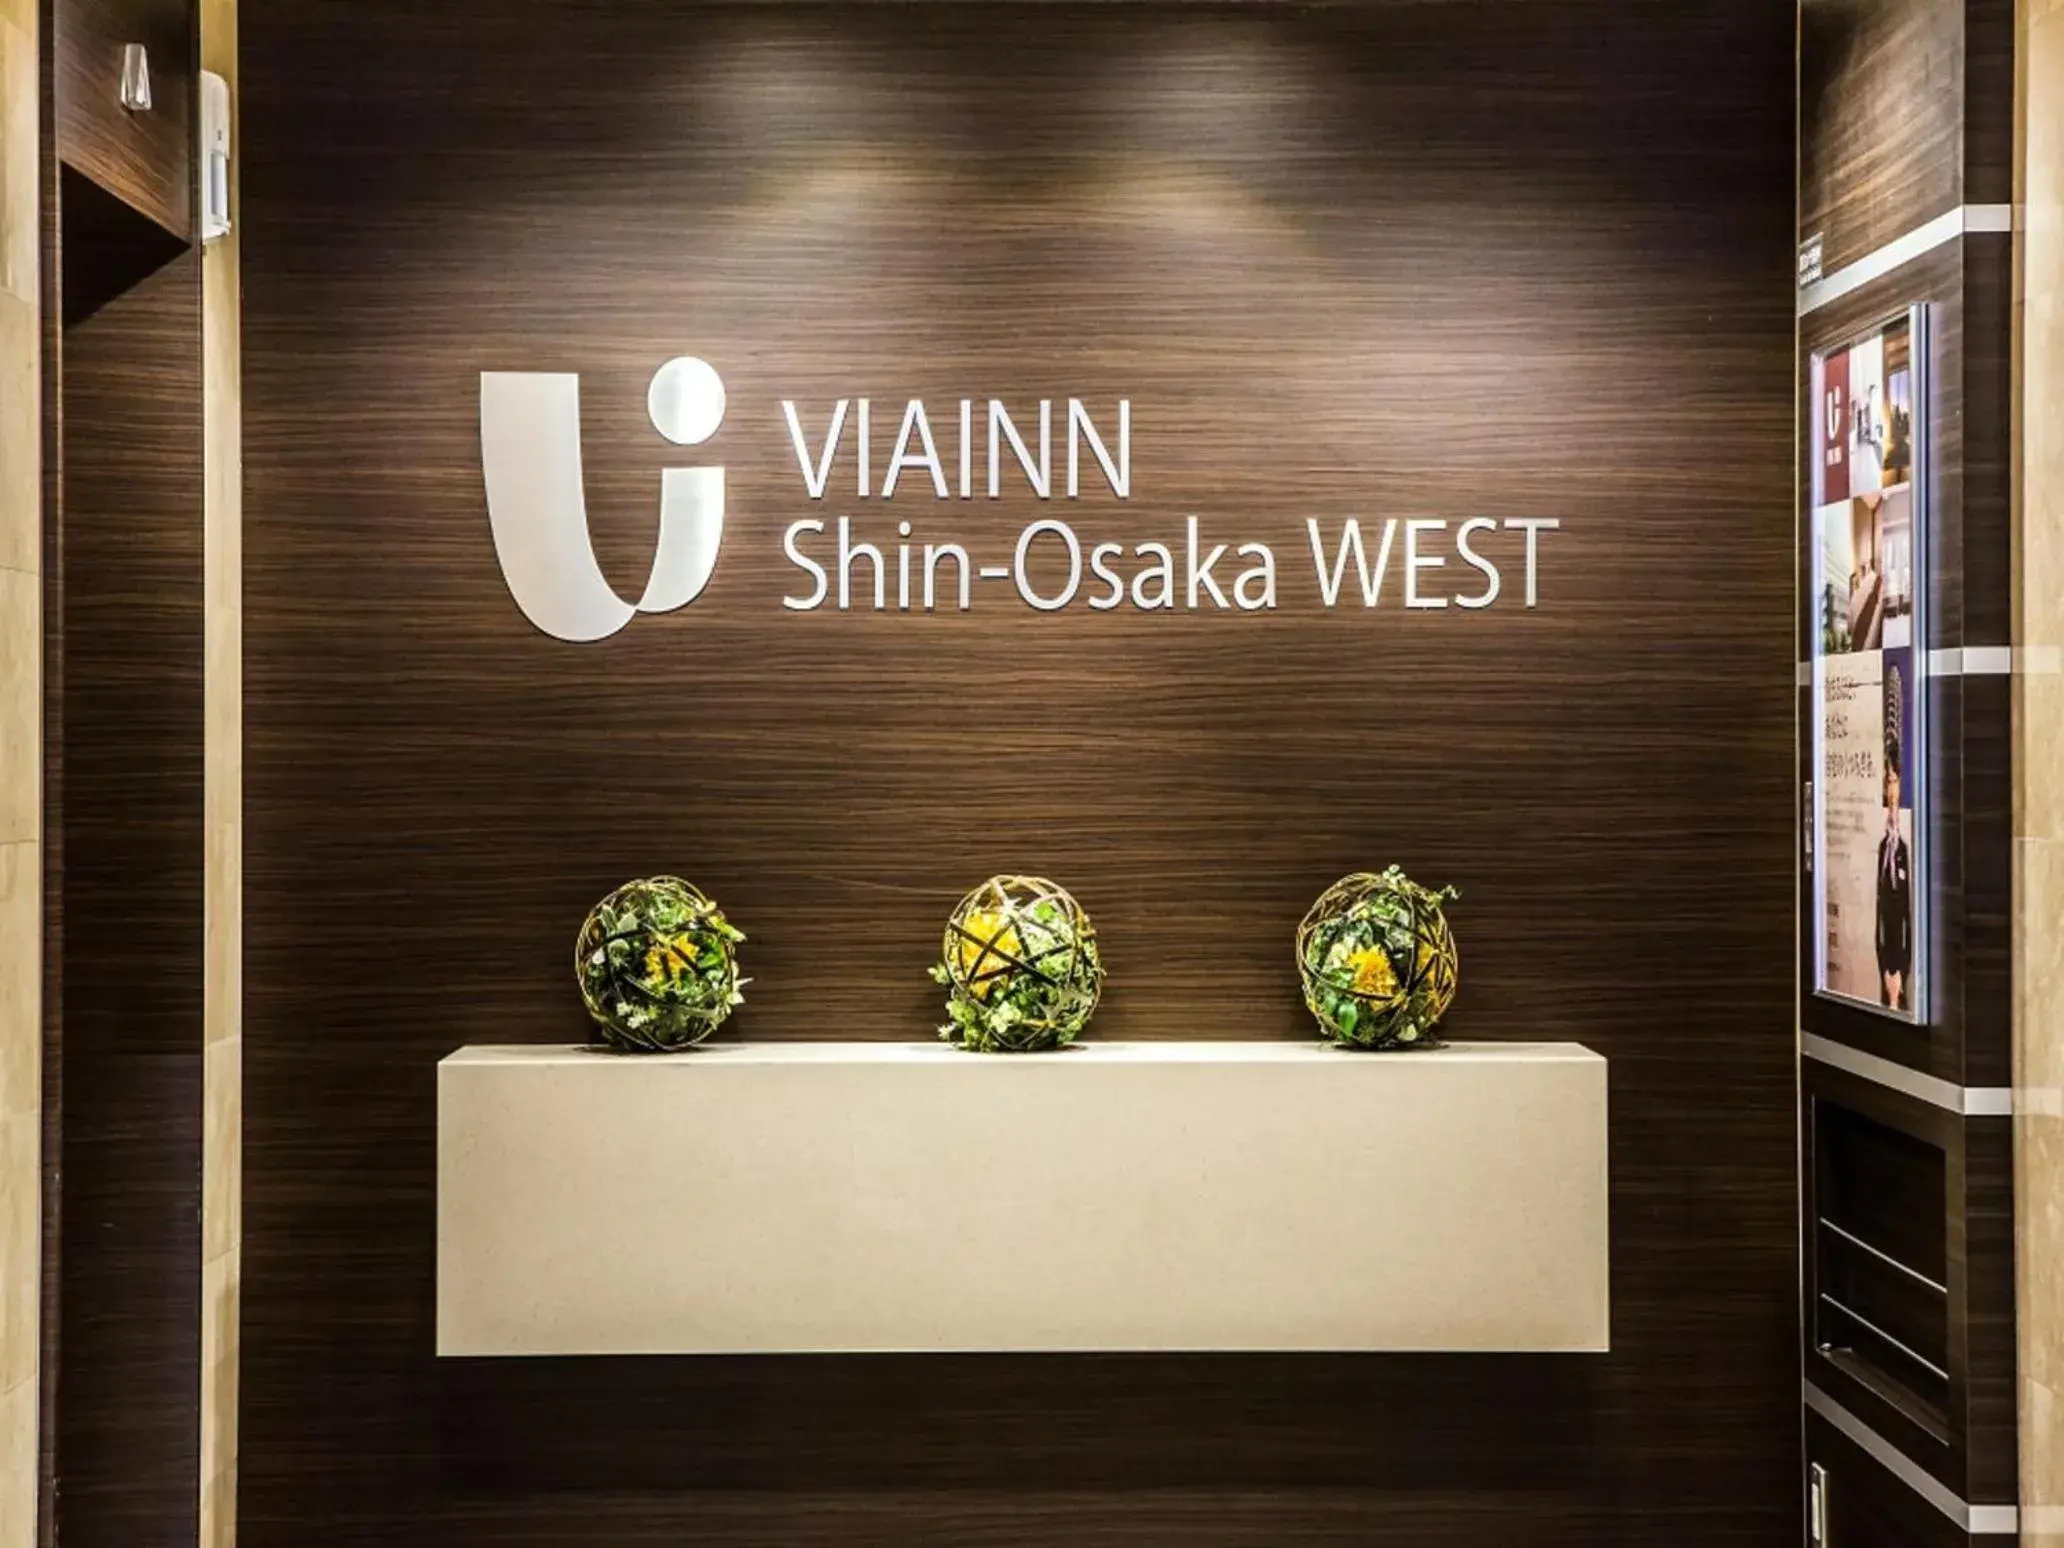 VIA INN SHIN OSAKA WEST - JR WEST GROUP